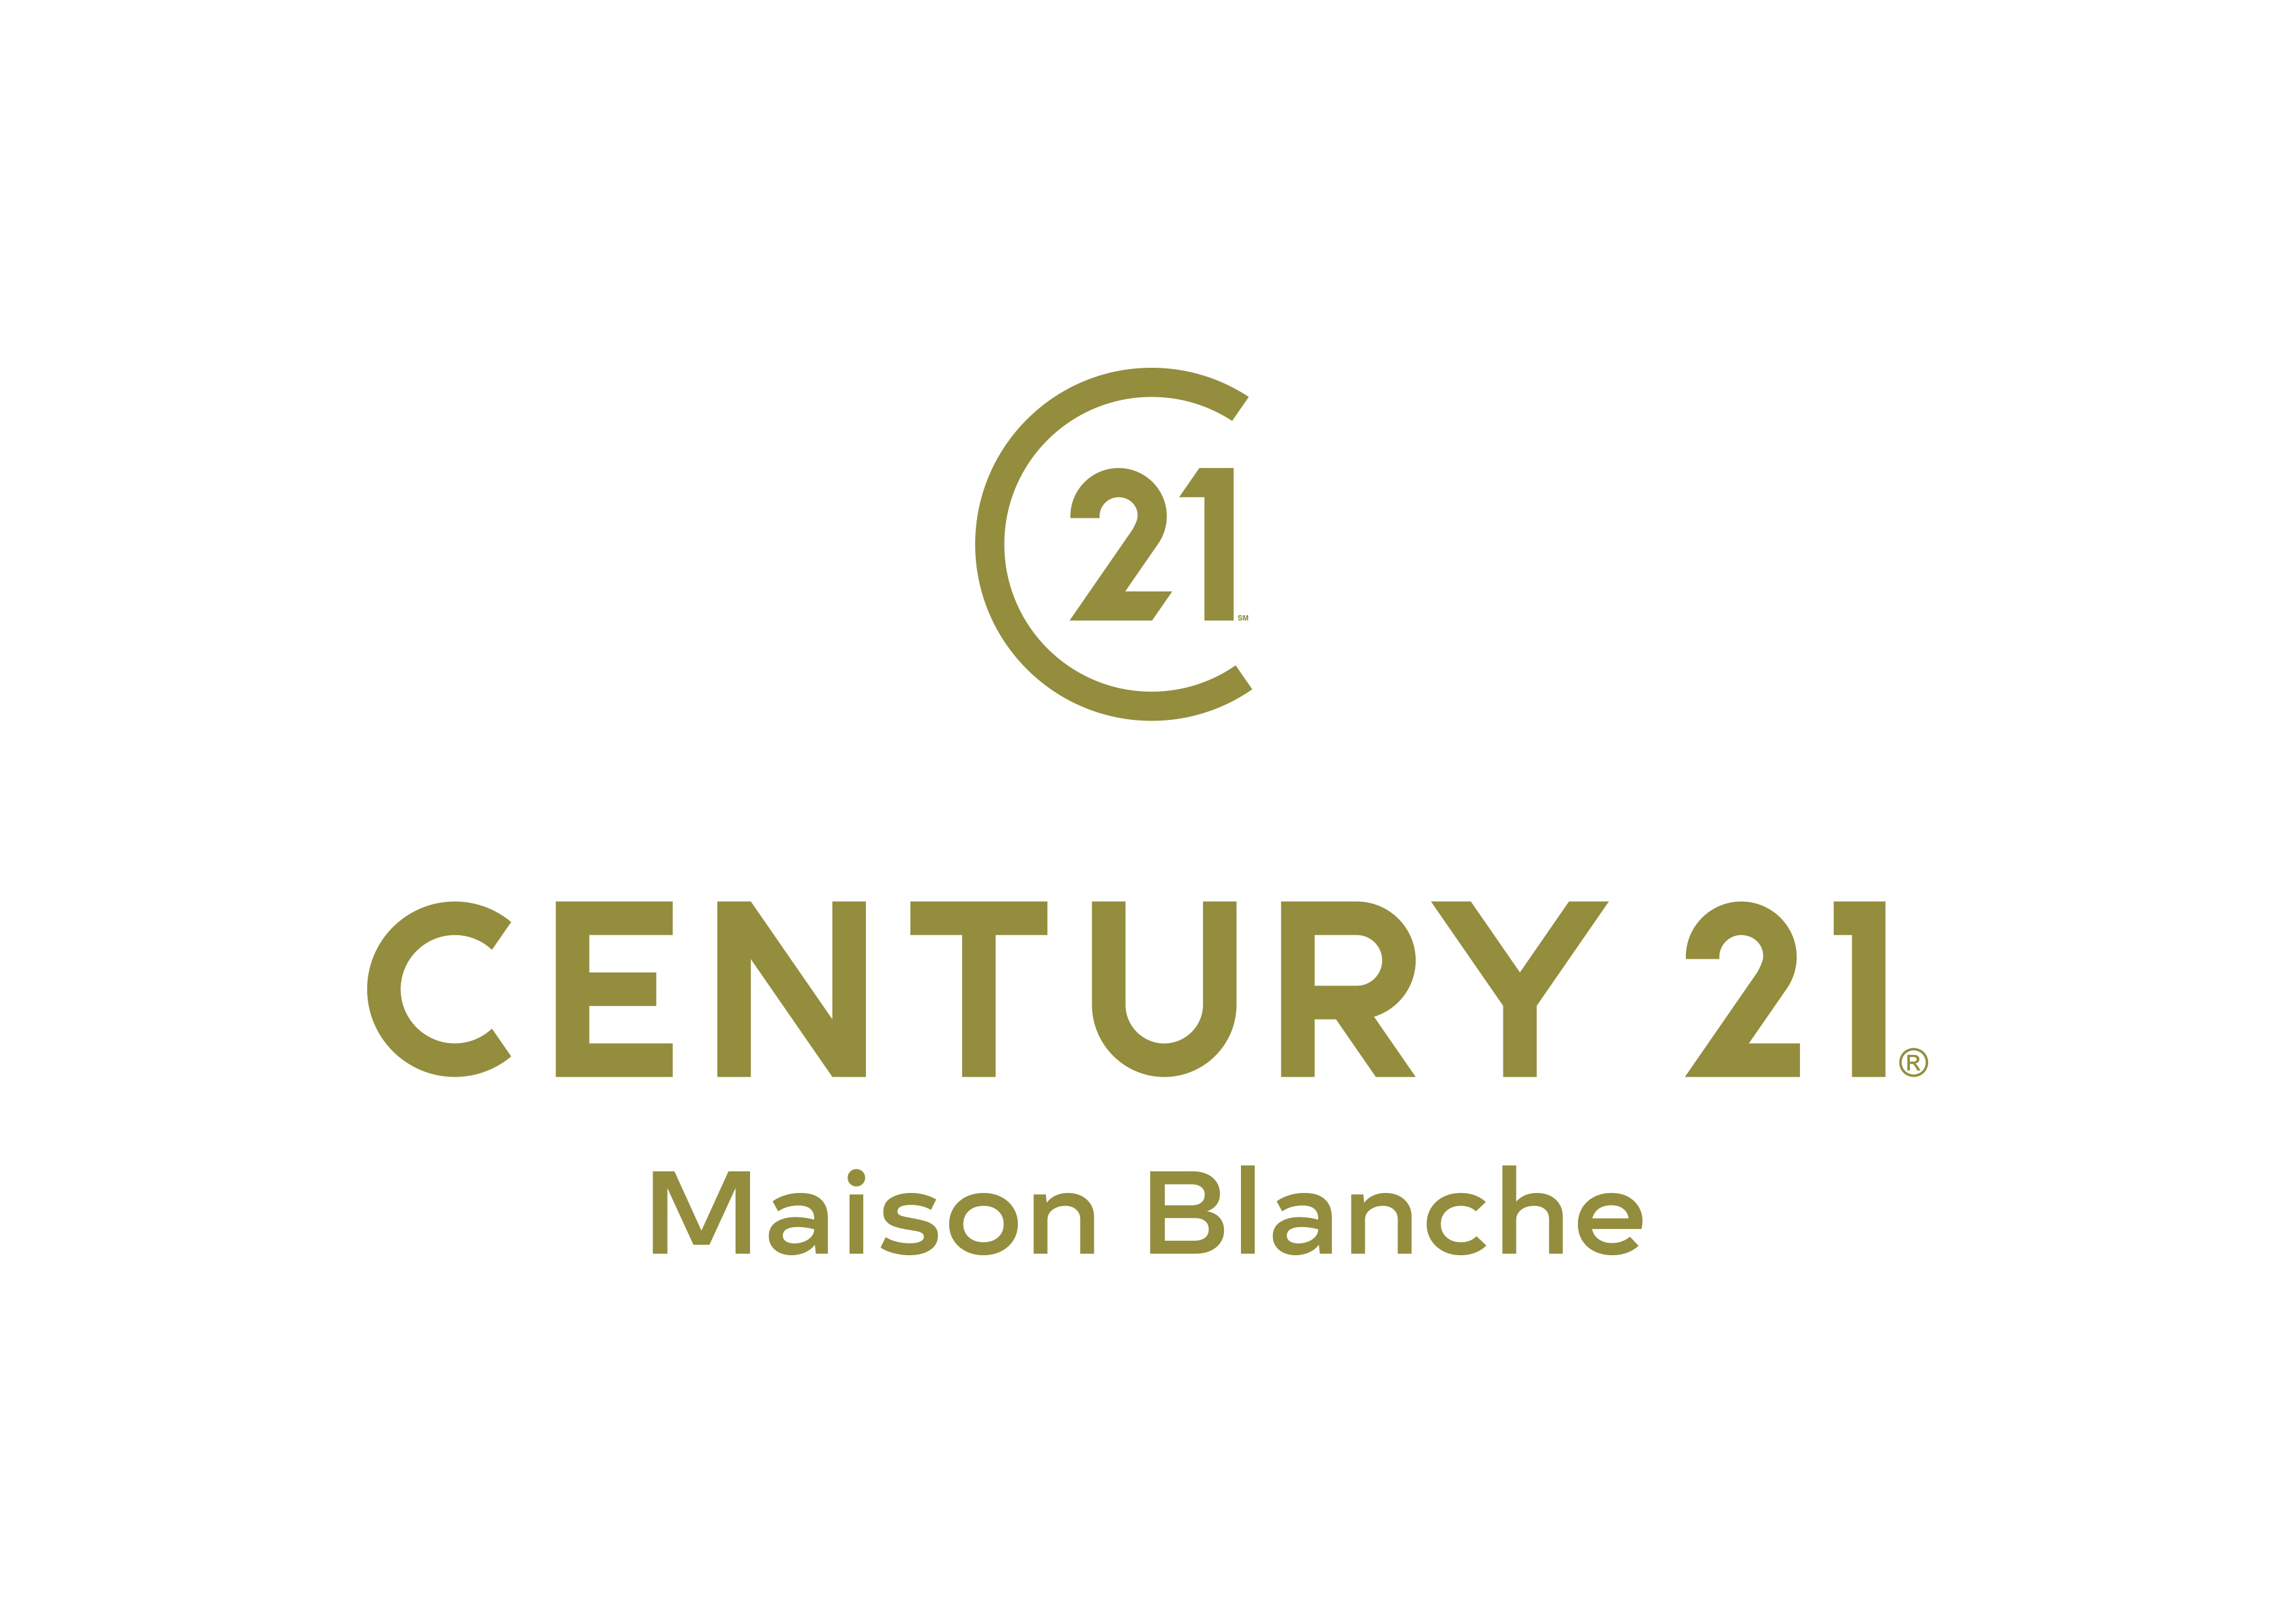 Century 21 Maison Blanche